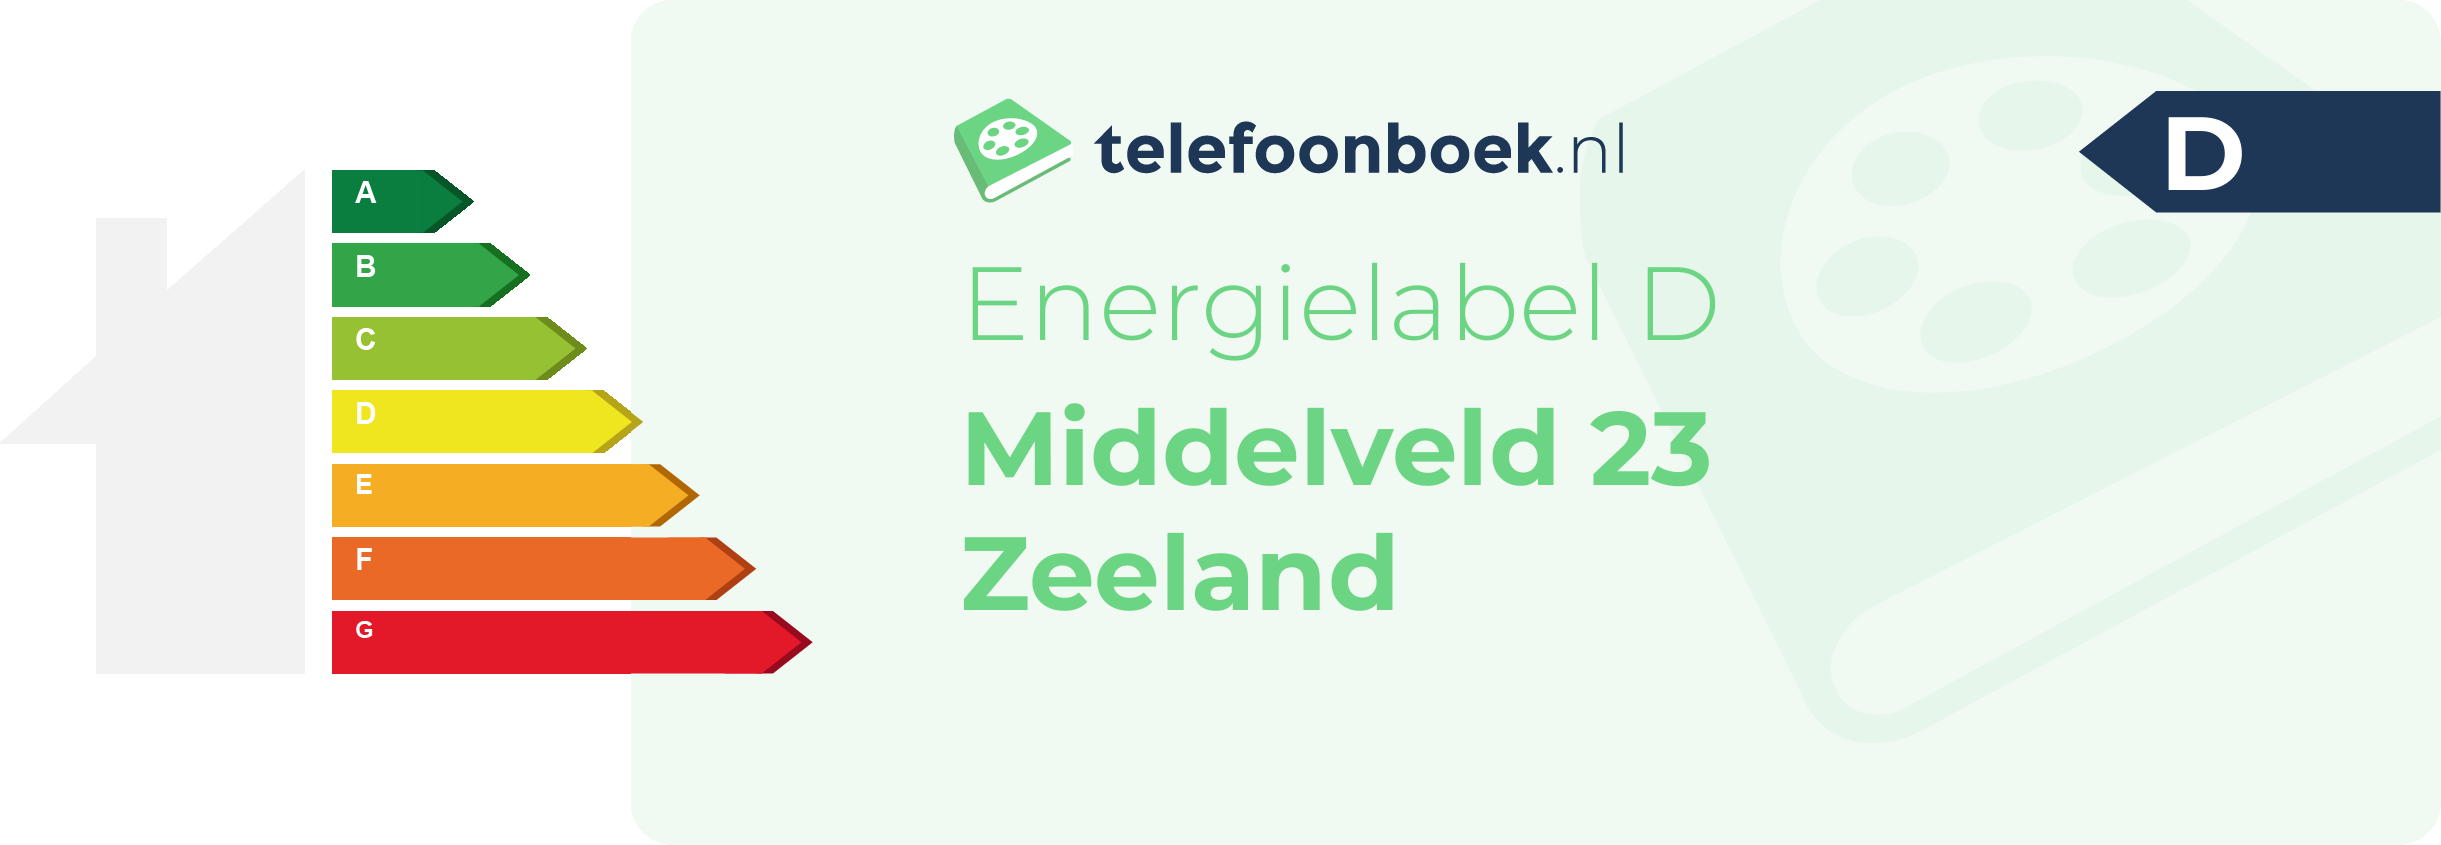 Energielabel Middelveld 23 Zeeland